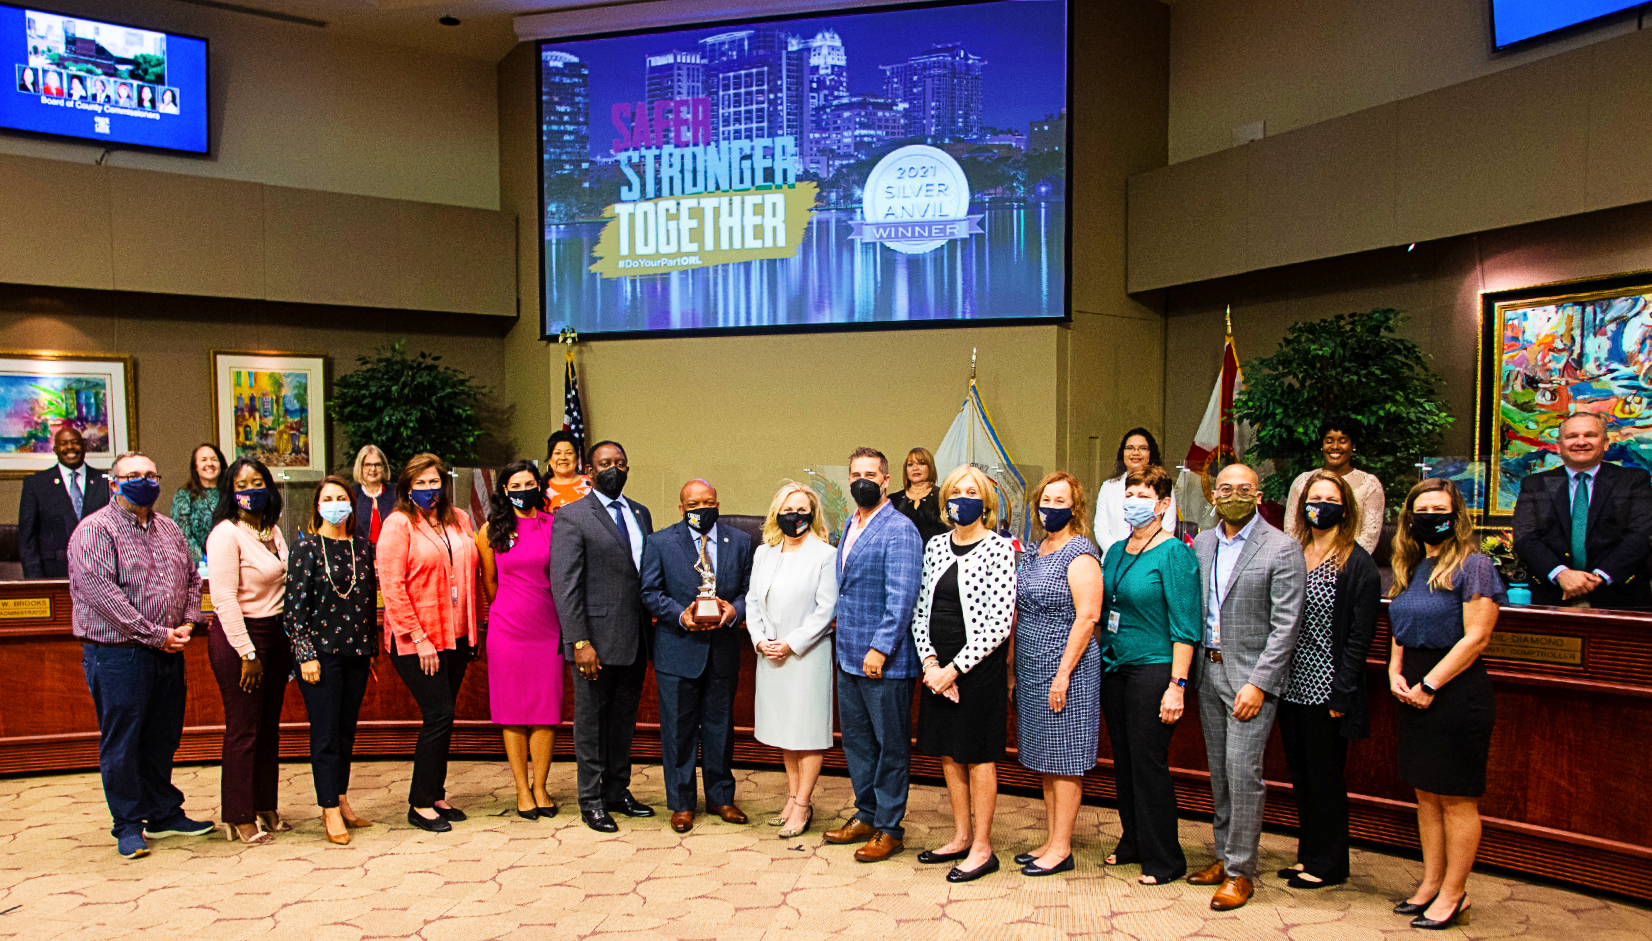 The Board of County Commissioners recognizes Visit Orlando, the Orlando Economic Partnership and Orange County for winning the prestigious PRSA Silver Anvil Award